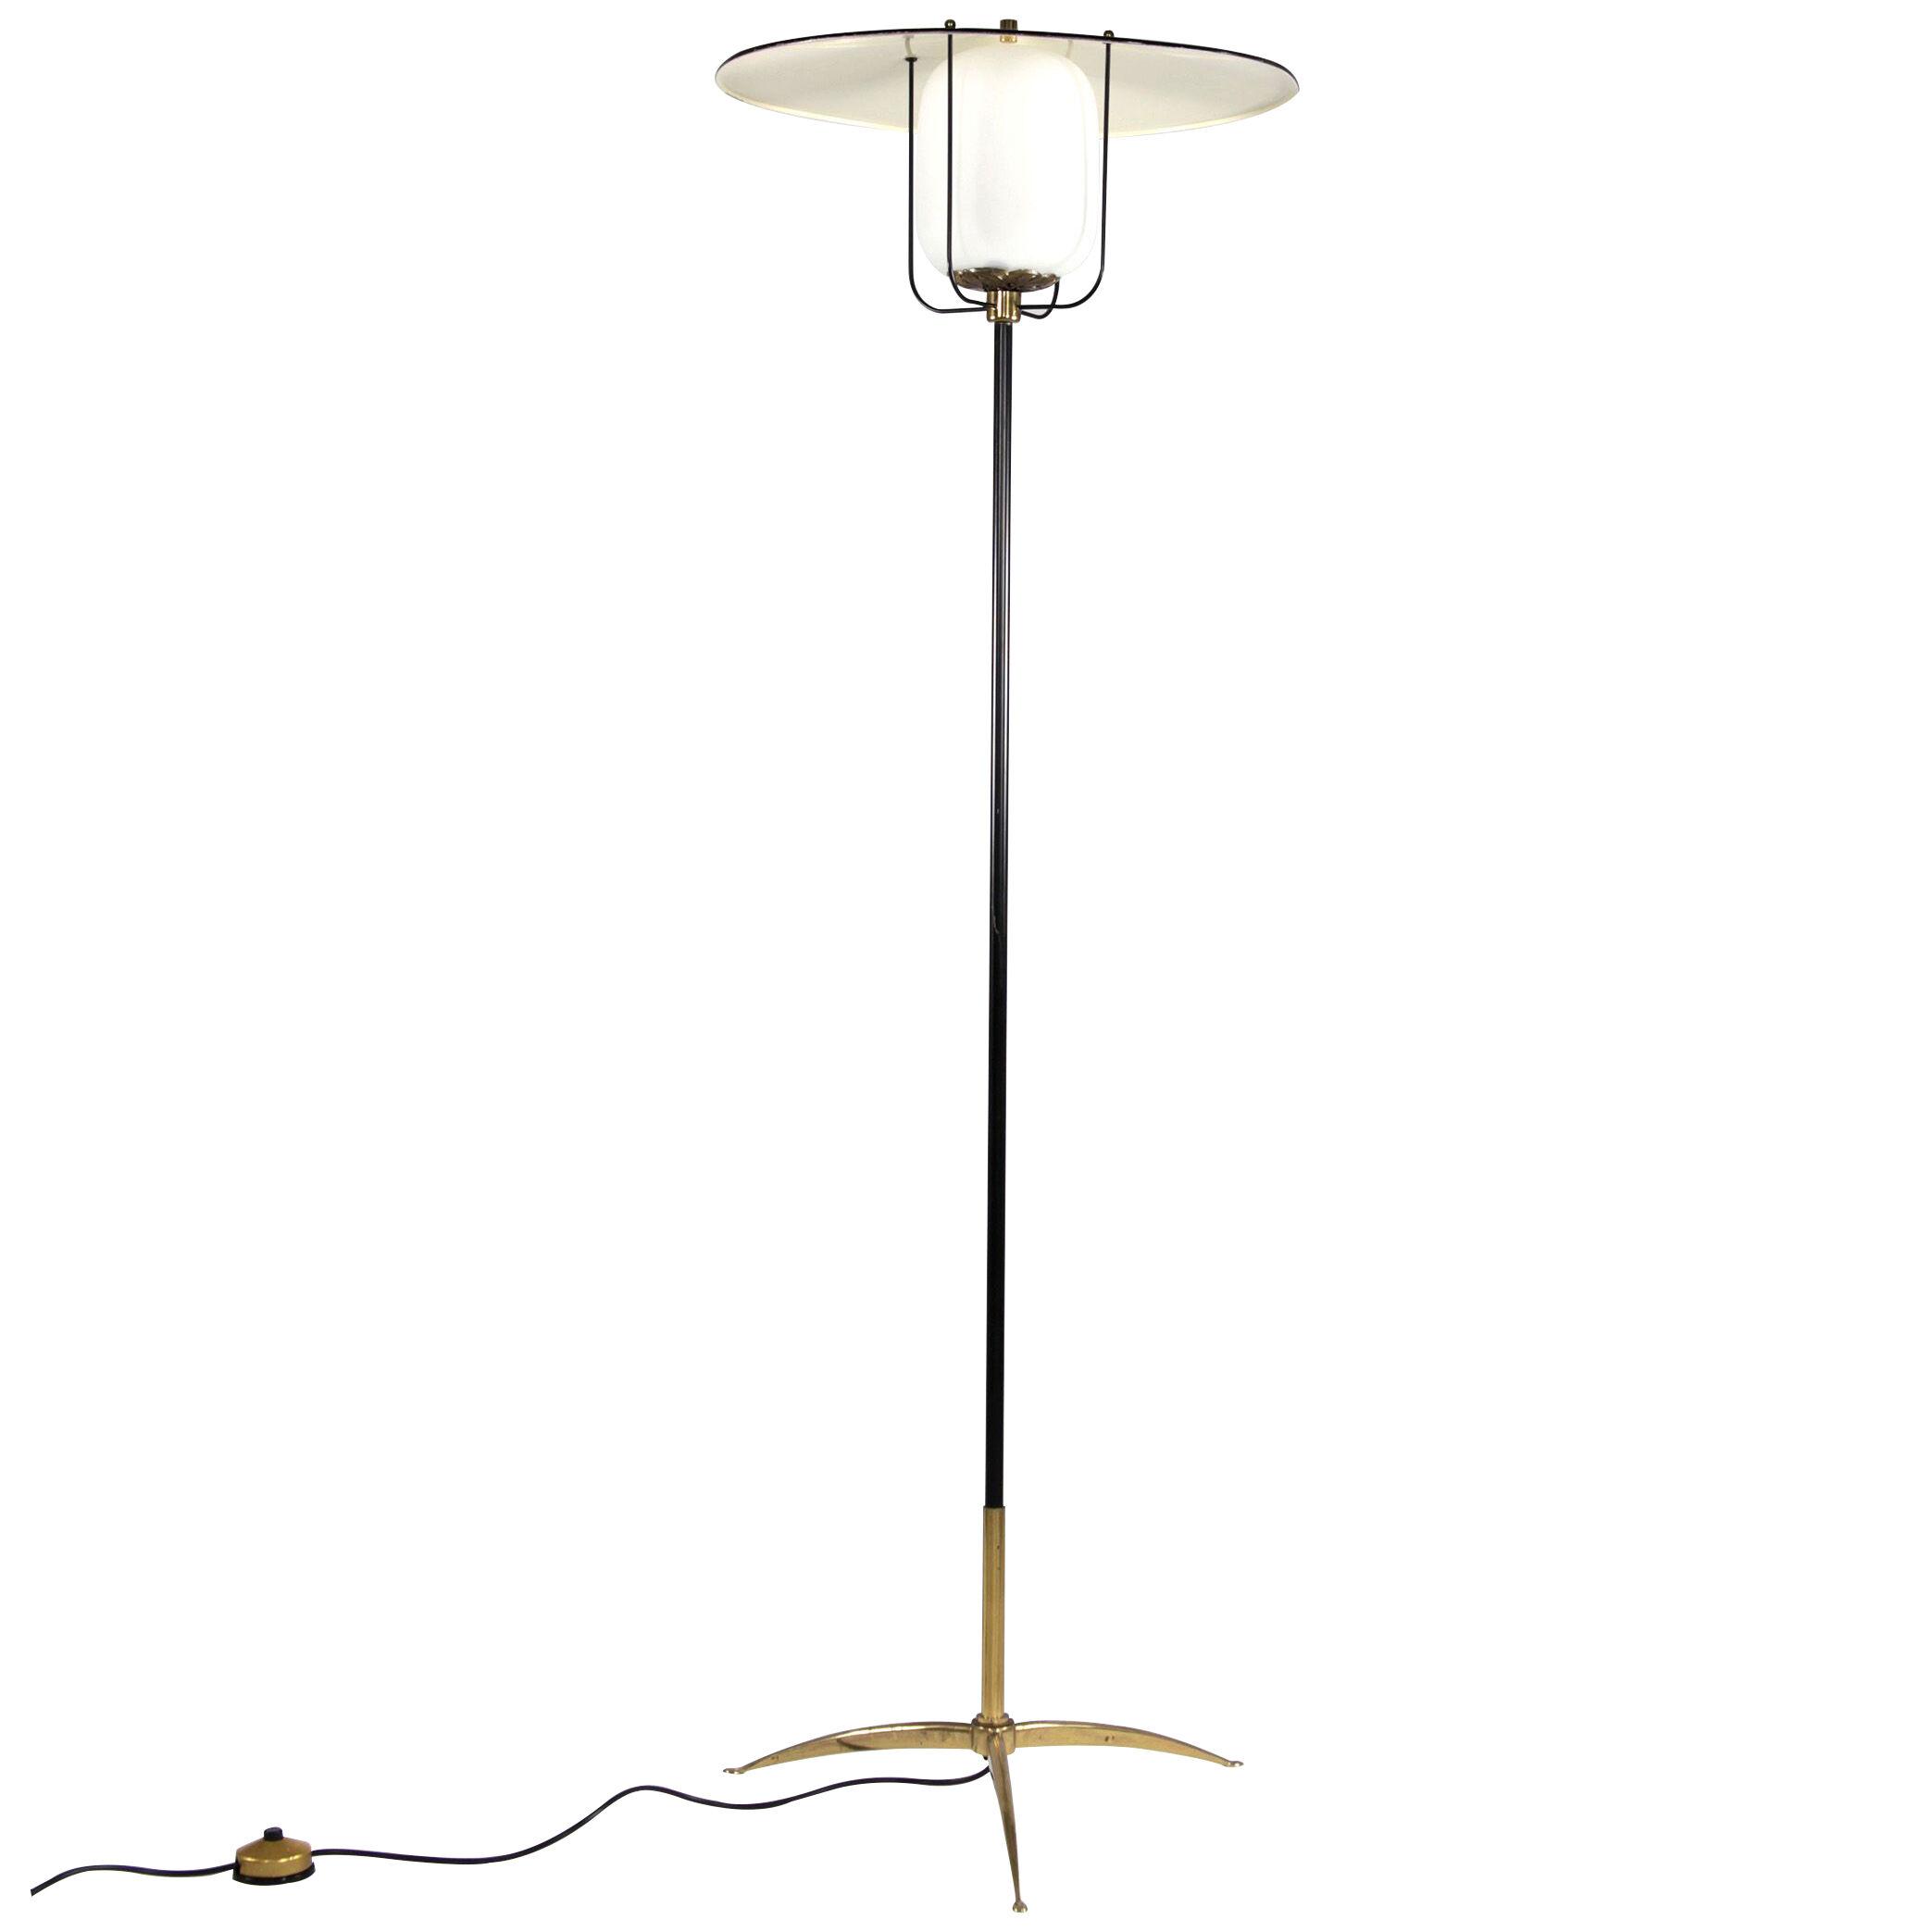 Italian Floor Lamp with Opaline Glass, Dark Lacquered Metal, Brass feet, 1950s.